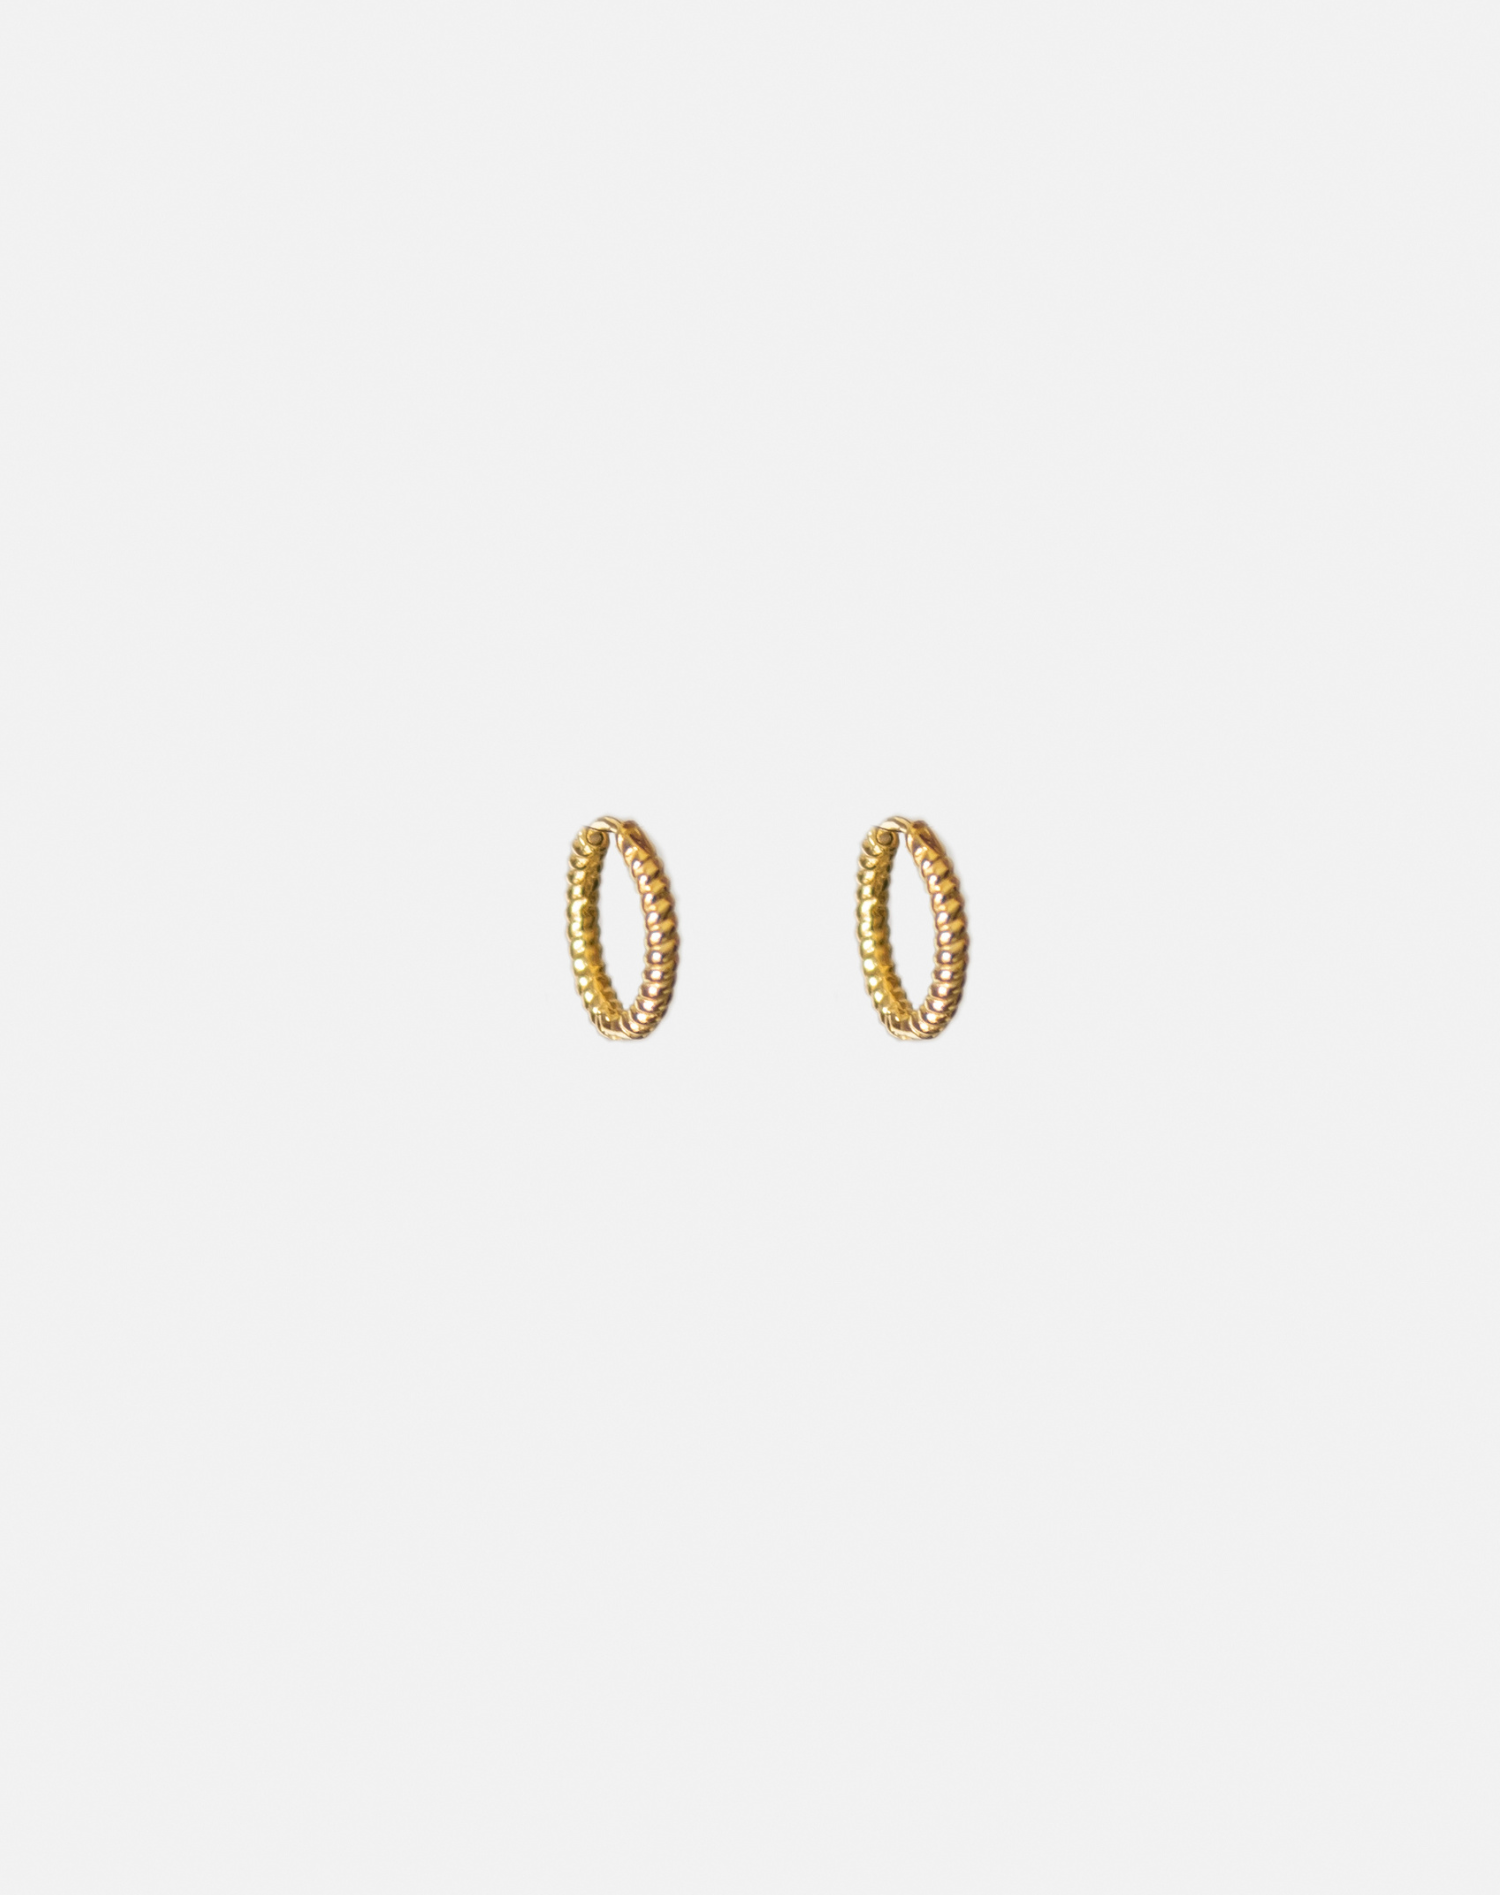 Teeny-Tiny Rose Gold Star Earring, Second hole Earrings – AMYO Jewelry